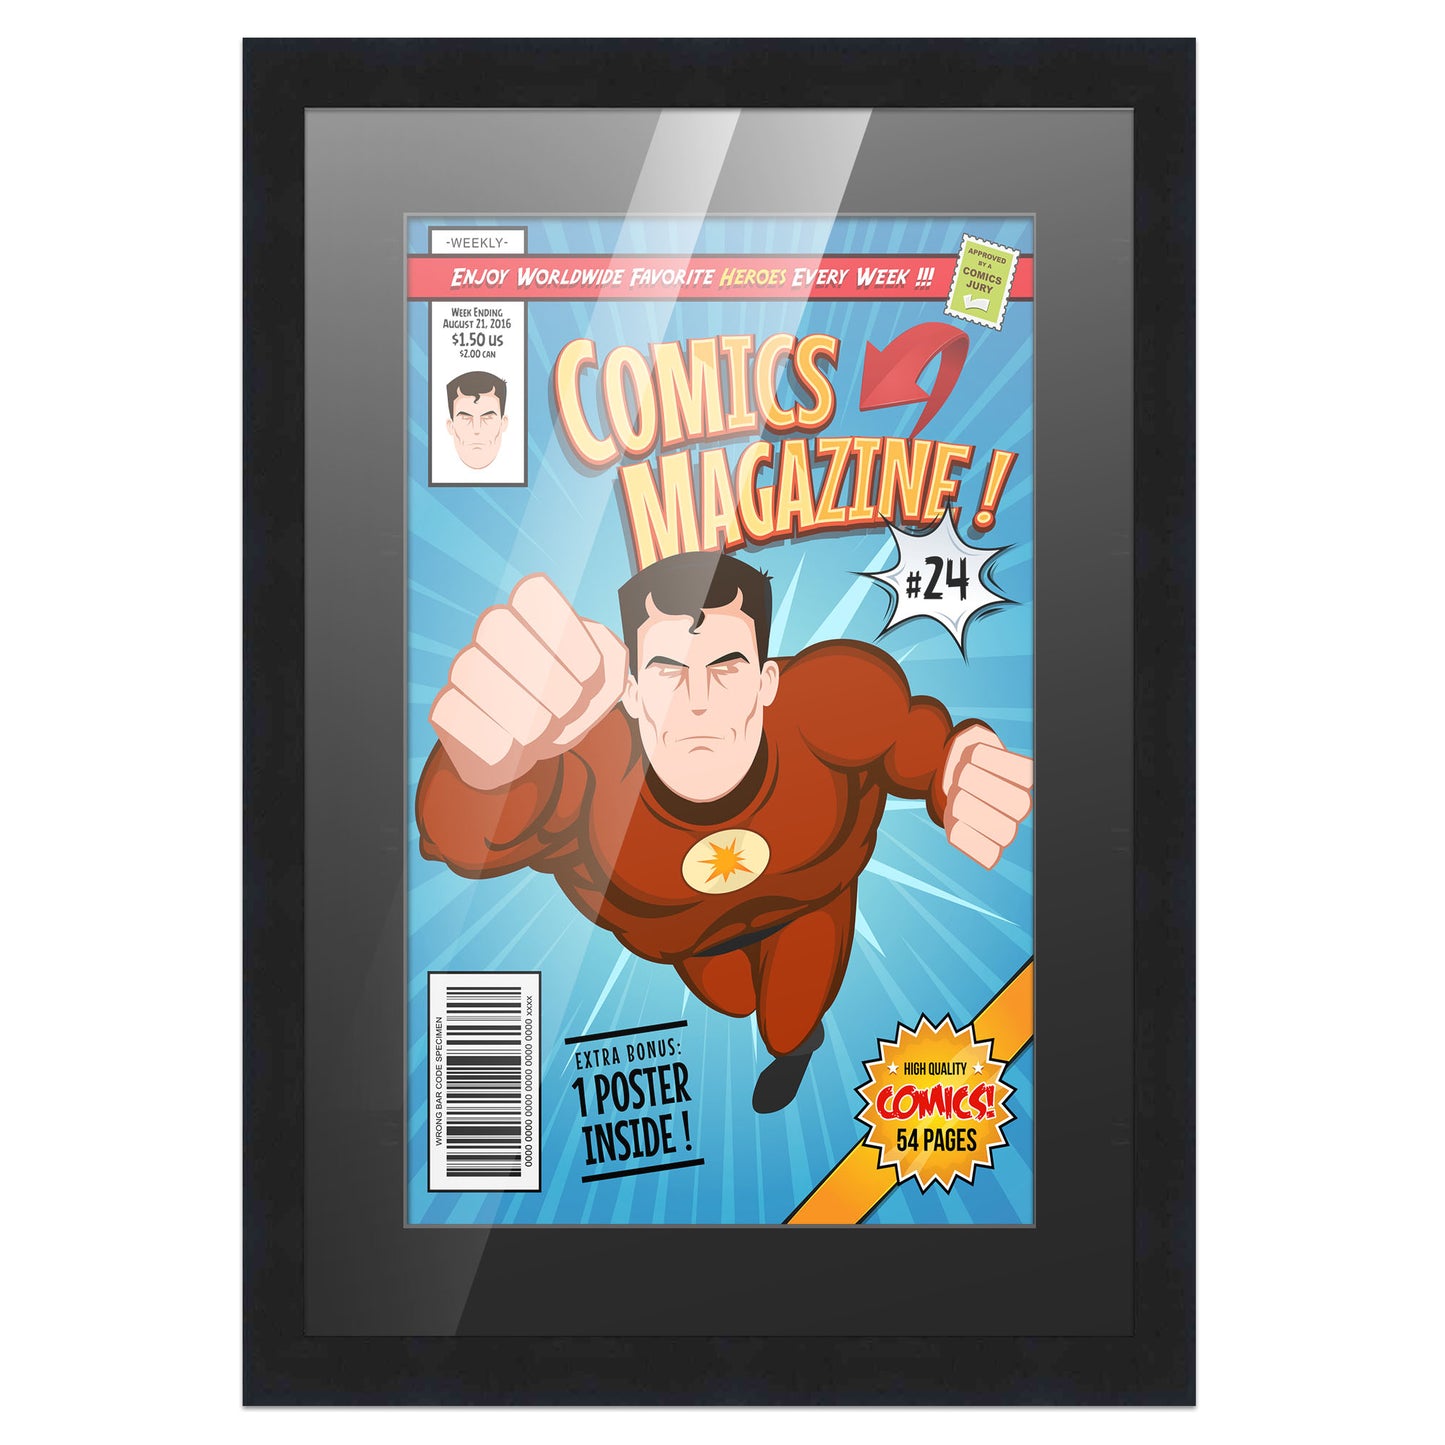 Comic Book Frame for 1 Comic Book